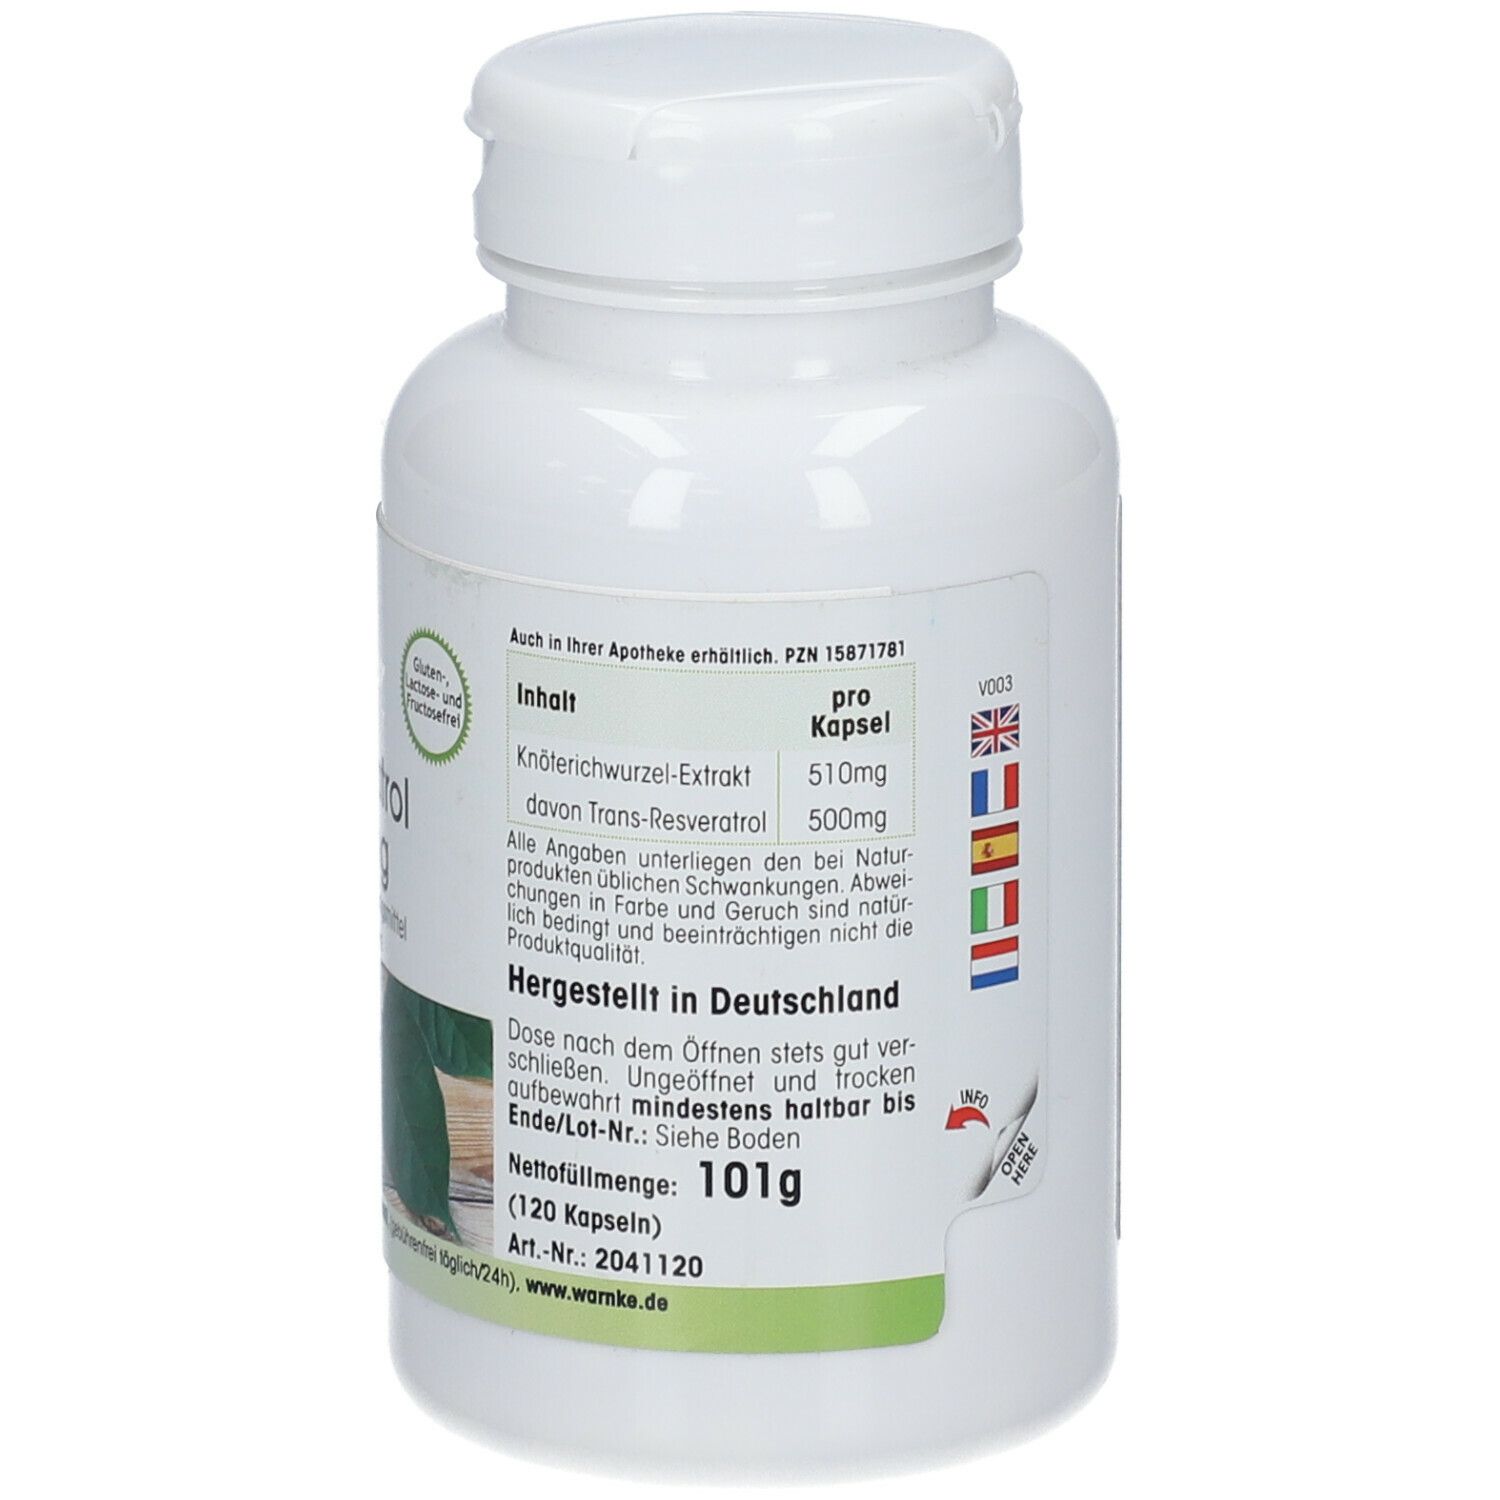 Resveratrol 500 mg Kapseln